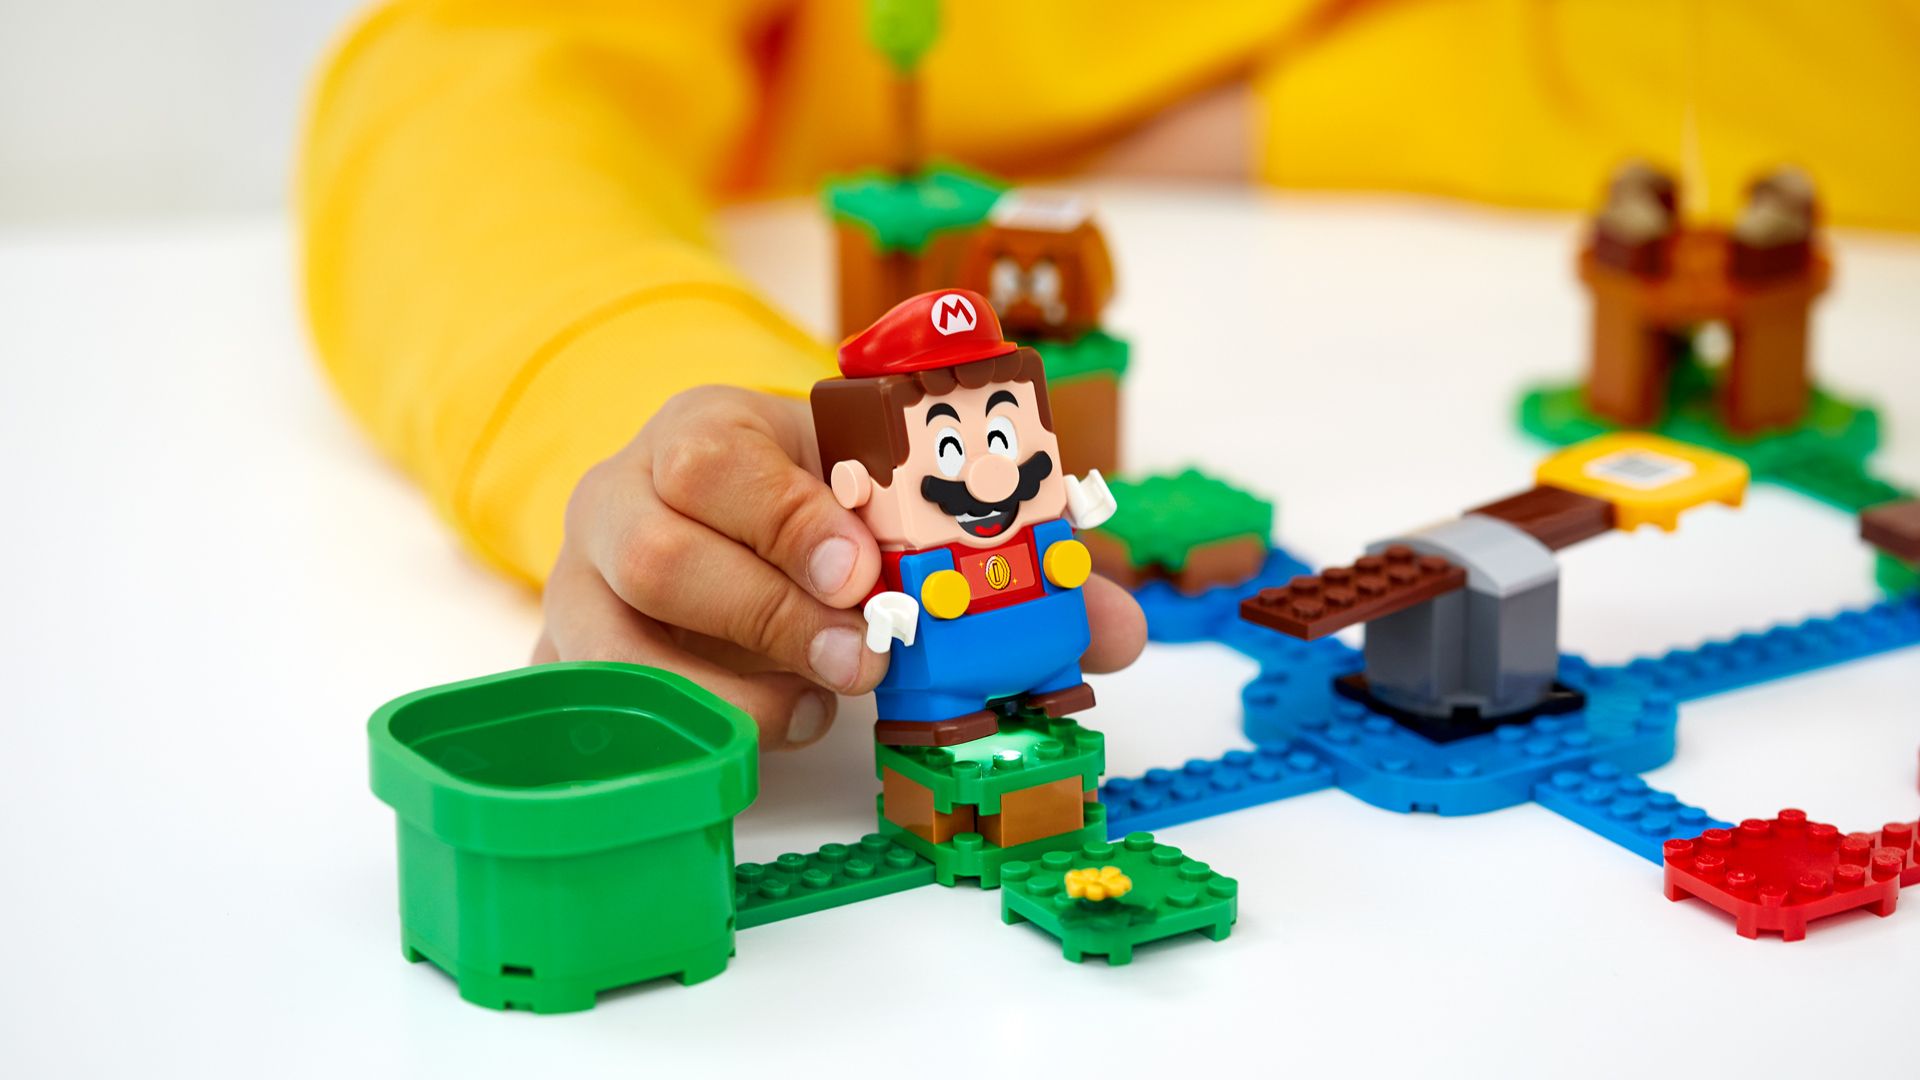 Lego Super Mario is Super Mario Maker meets Labo and it's pure joy